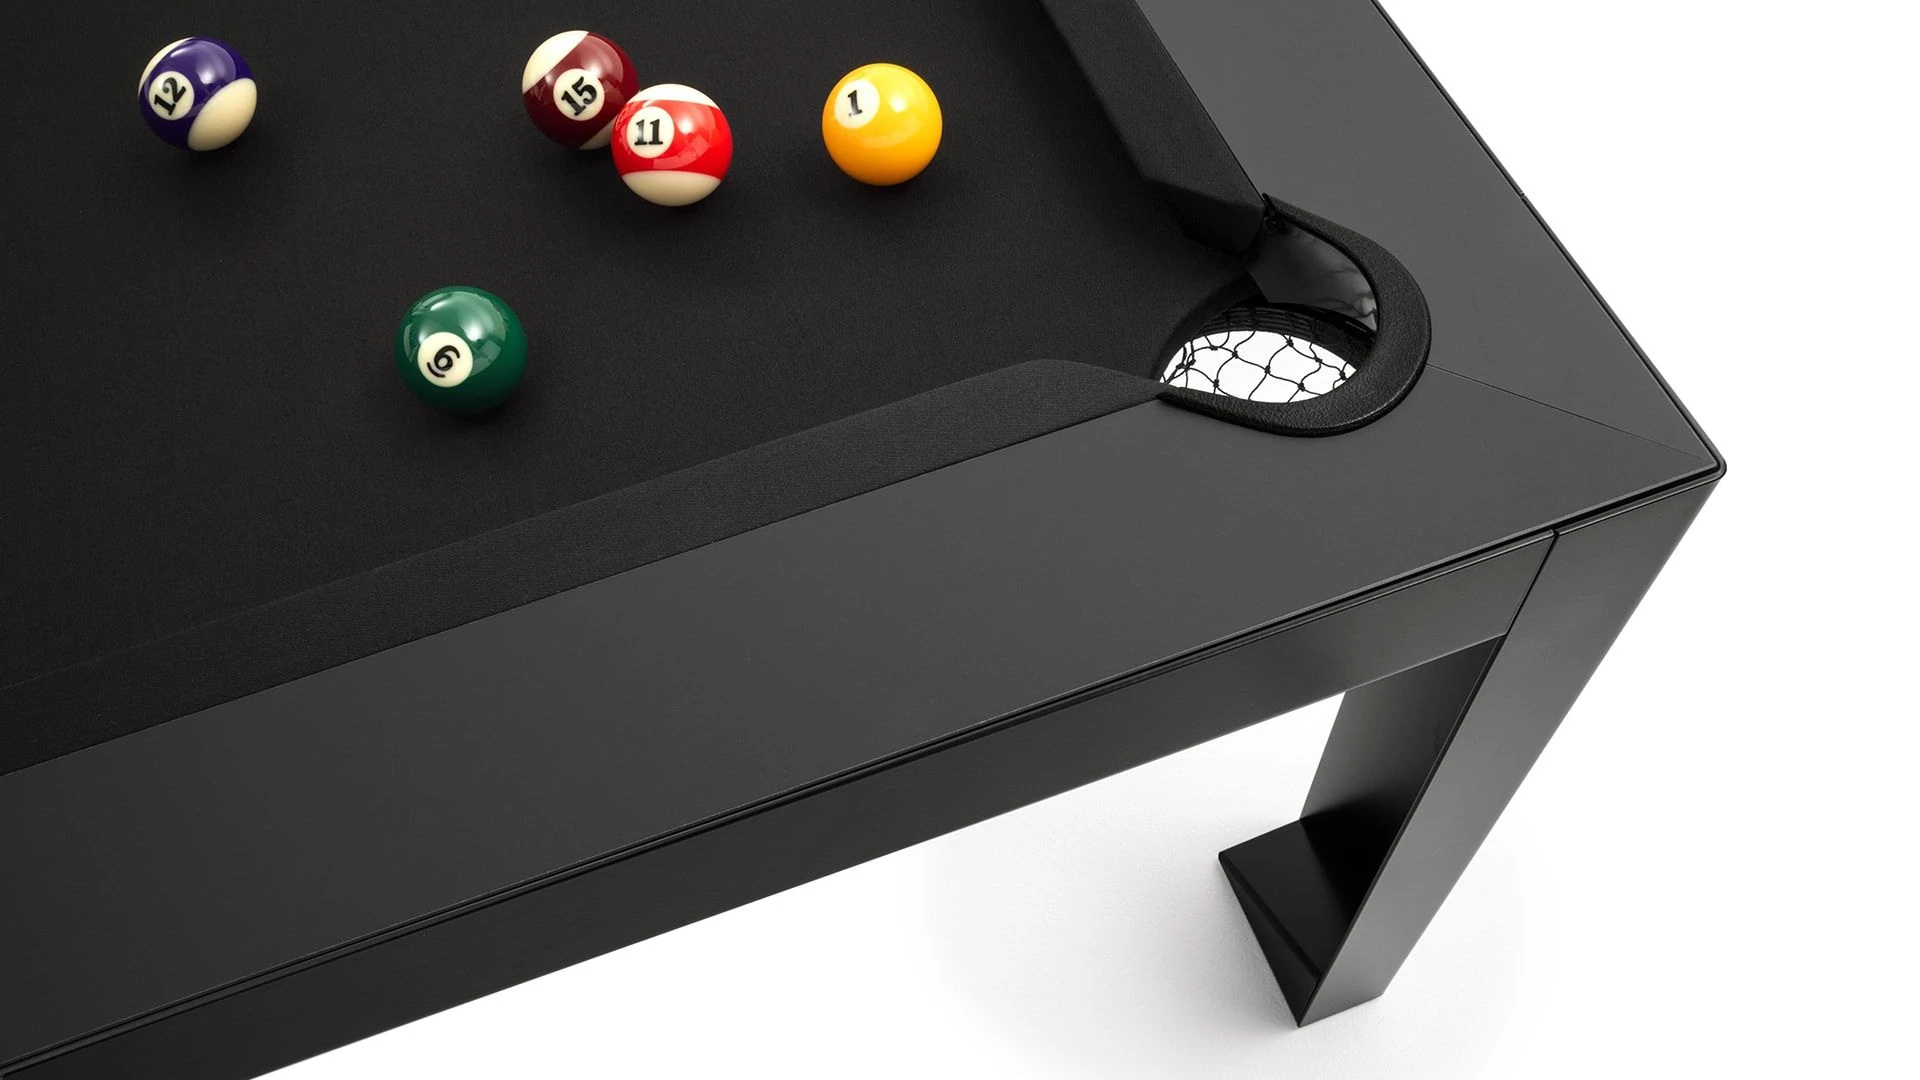 Billiards: Minimalistic modern monochrome eight-ball table, Recreational activity and cue sport. 1920x1080 Full HD Wallpaper.